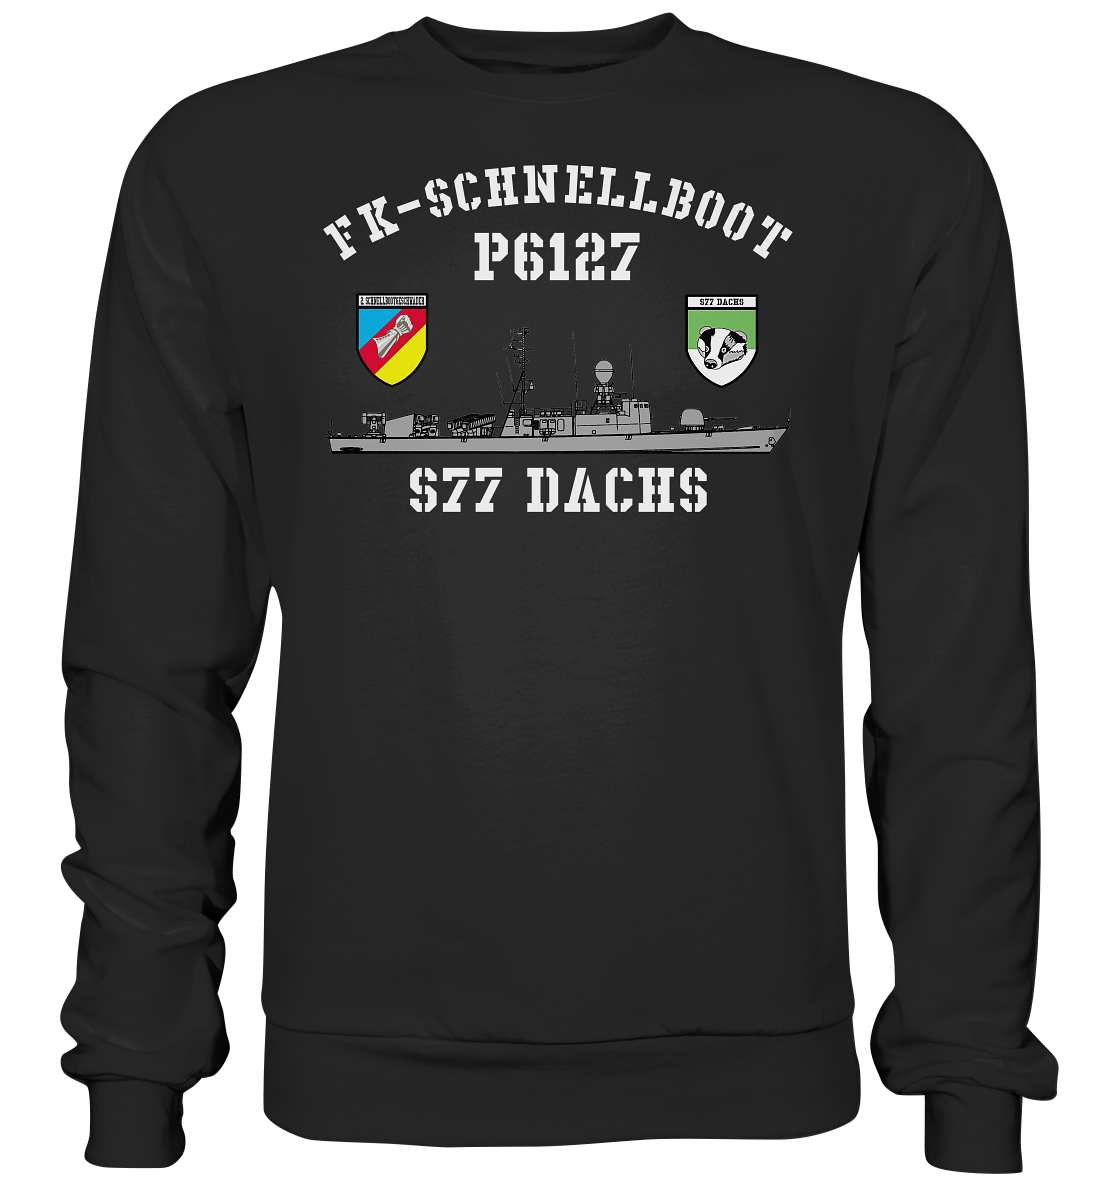 P6127 S77 DACHS 2.SG  - Premium Sweatshirt